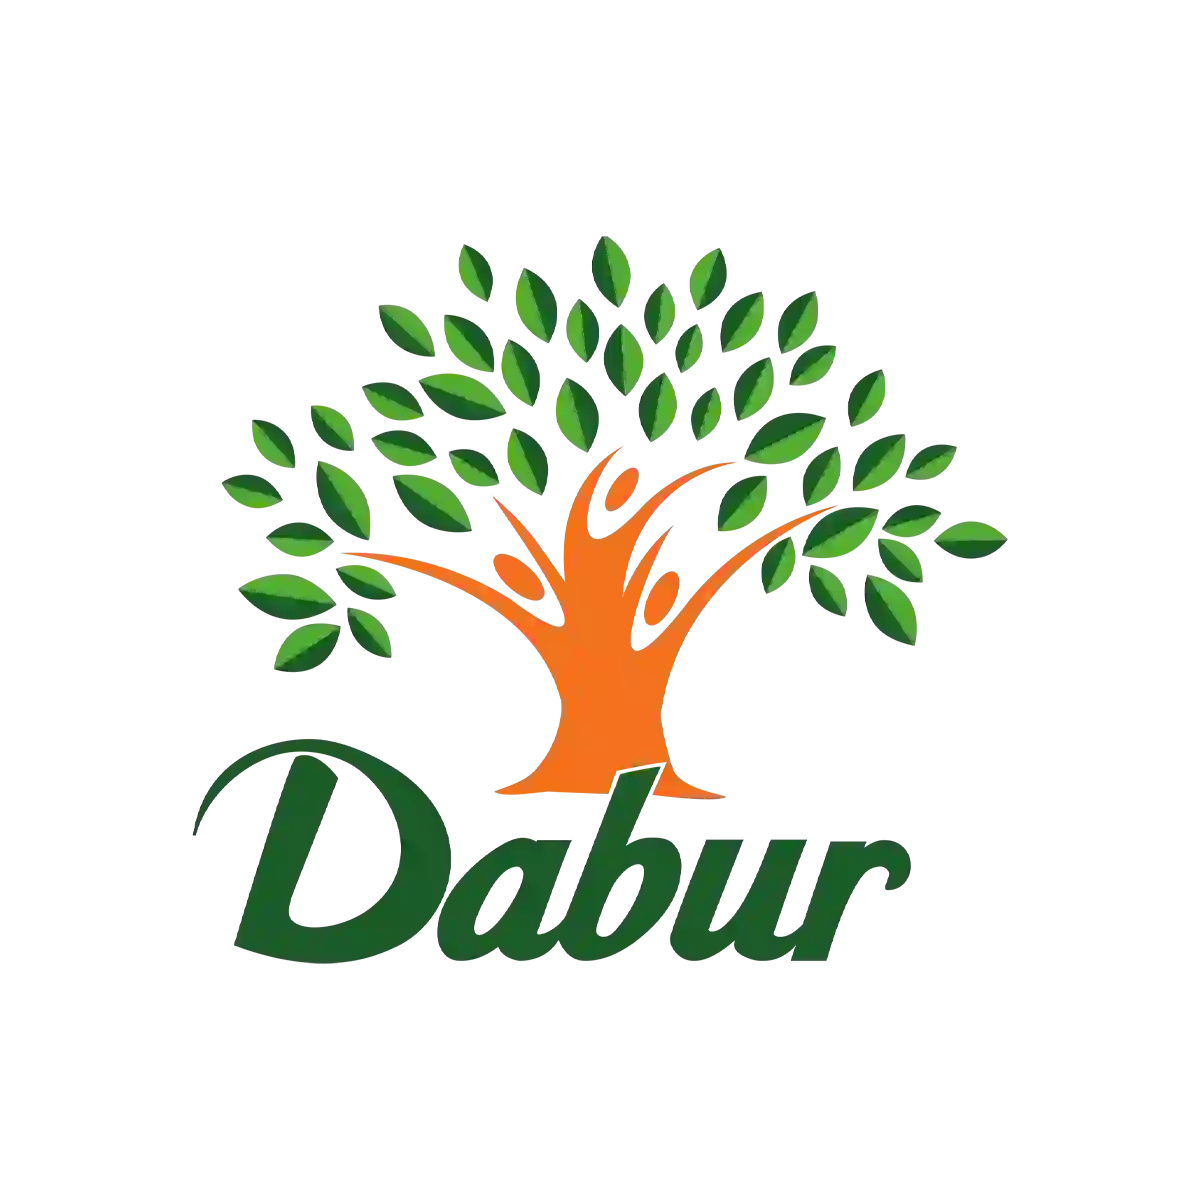 Dabur Logo (1)